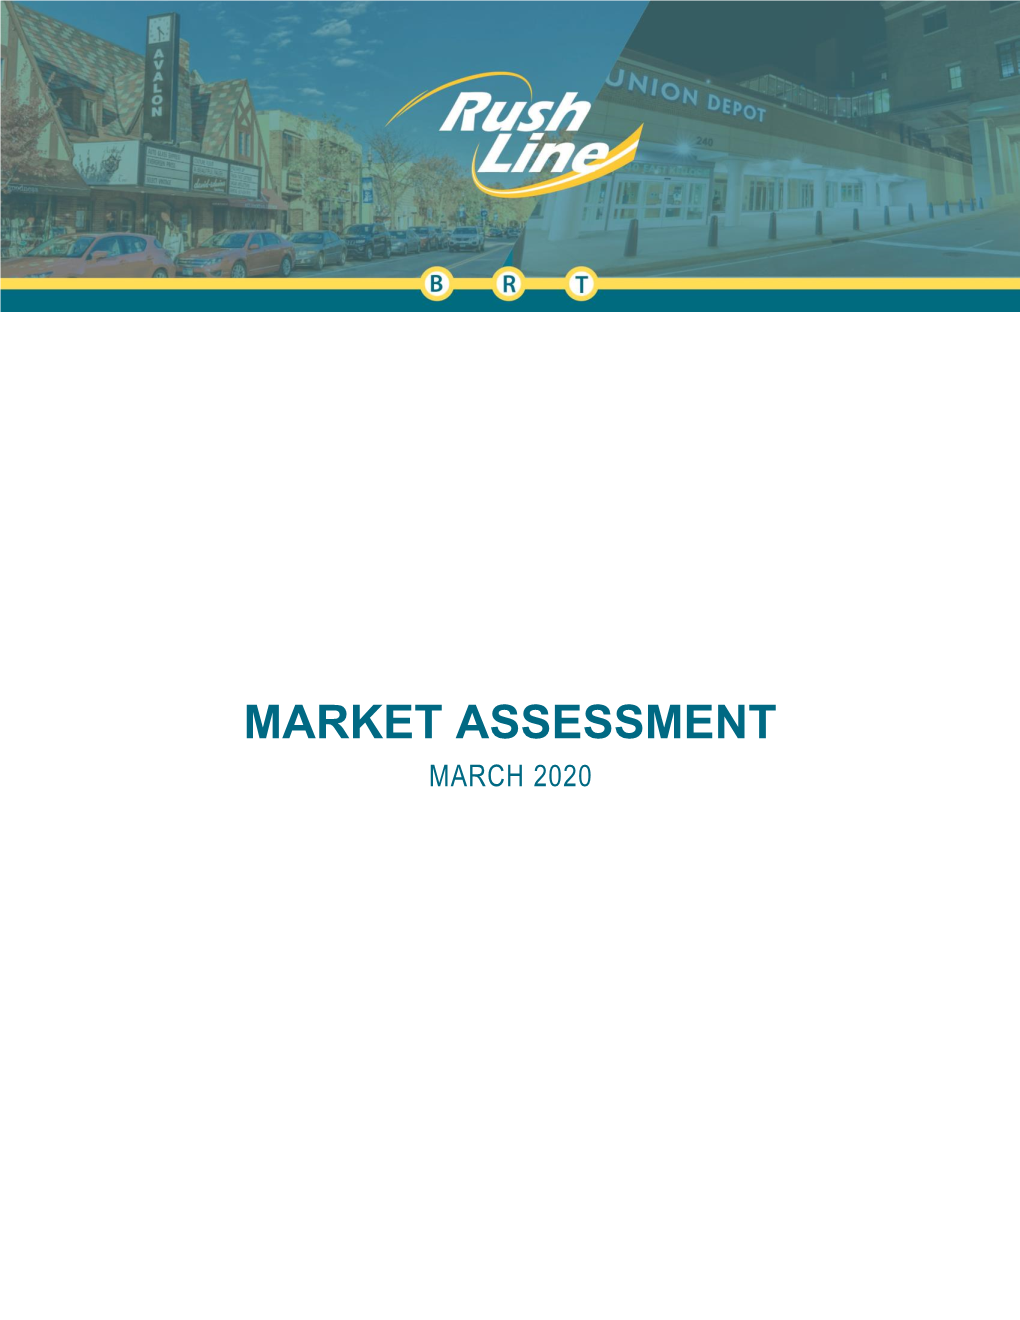 Market Assessment March 2020